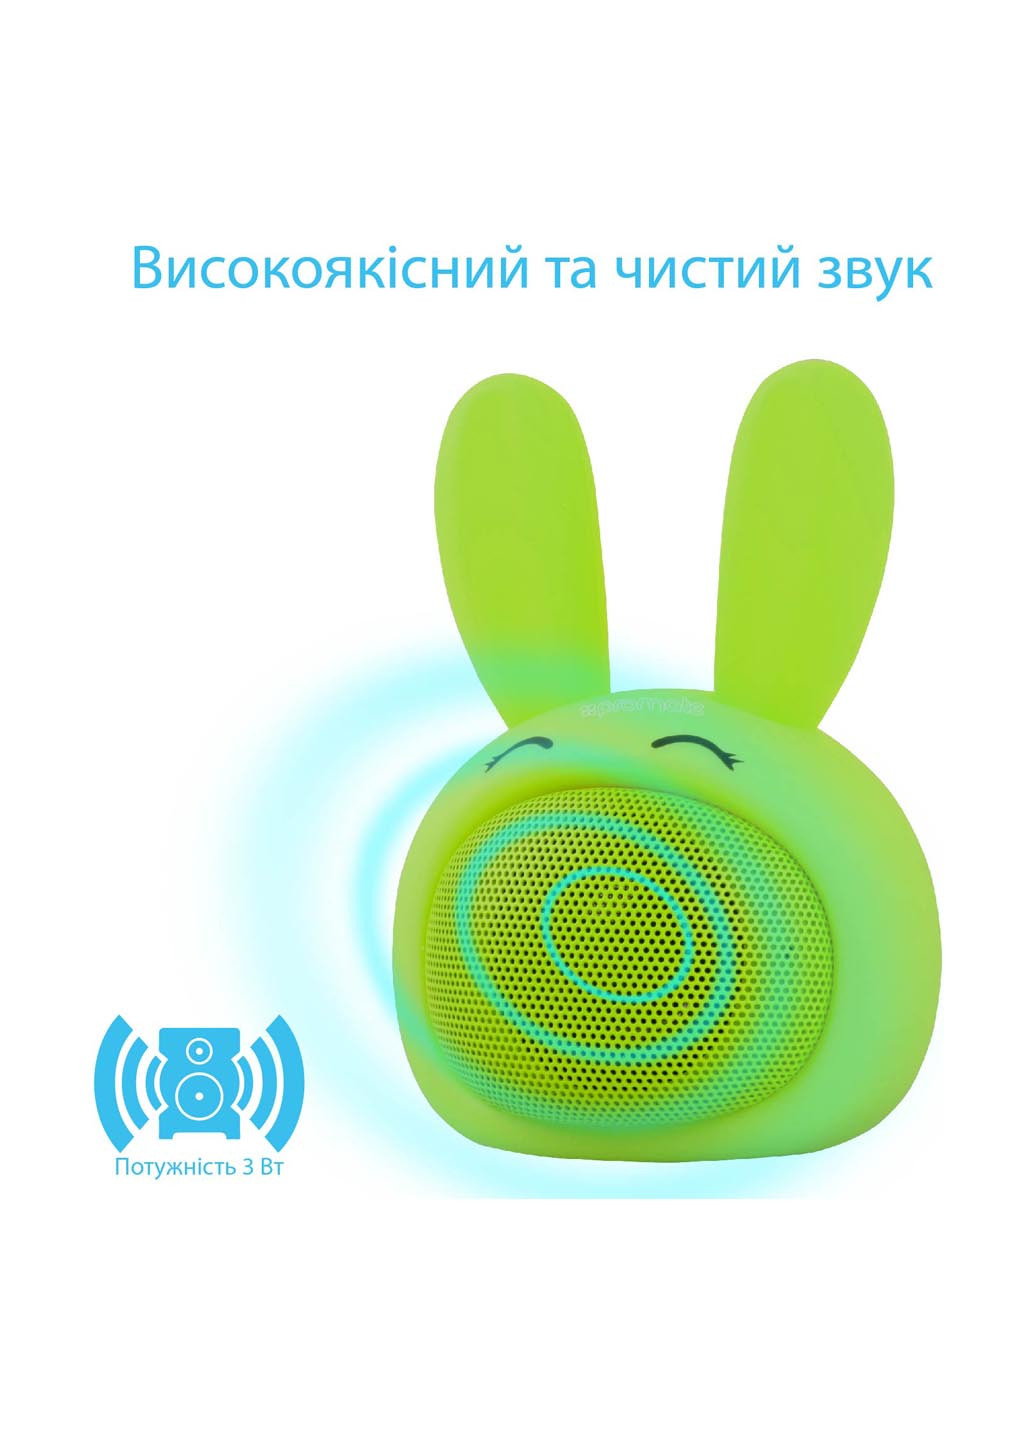 Портативна колонка Green Promate bunny (132824610)